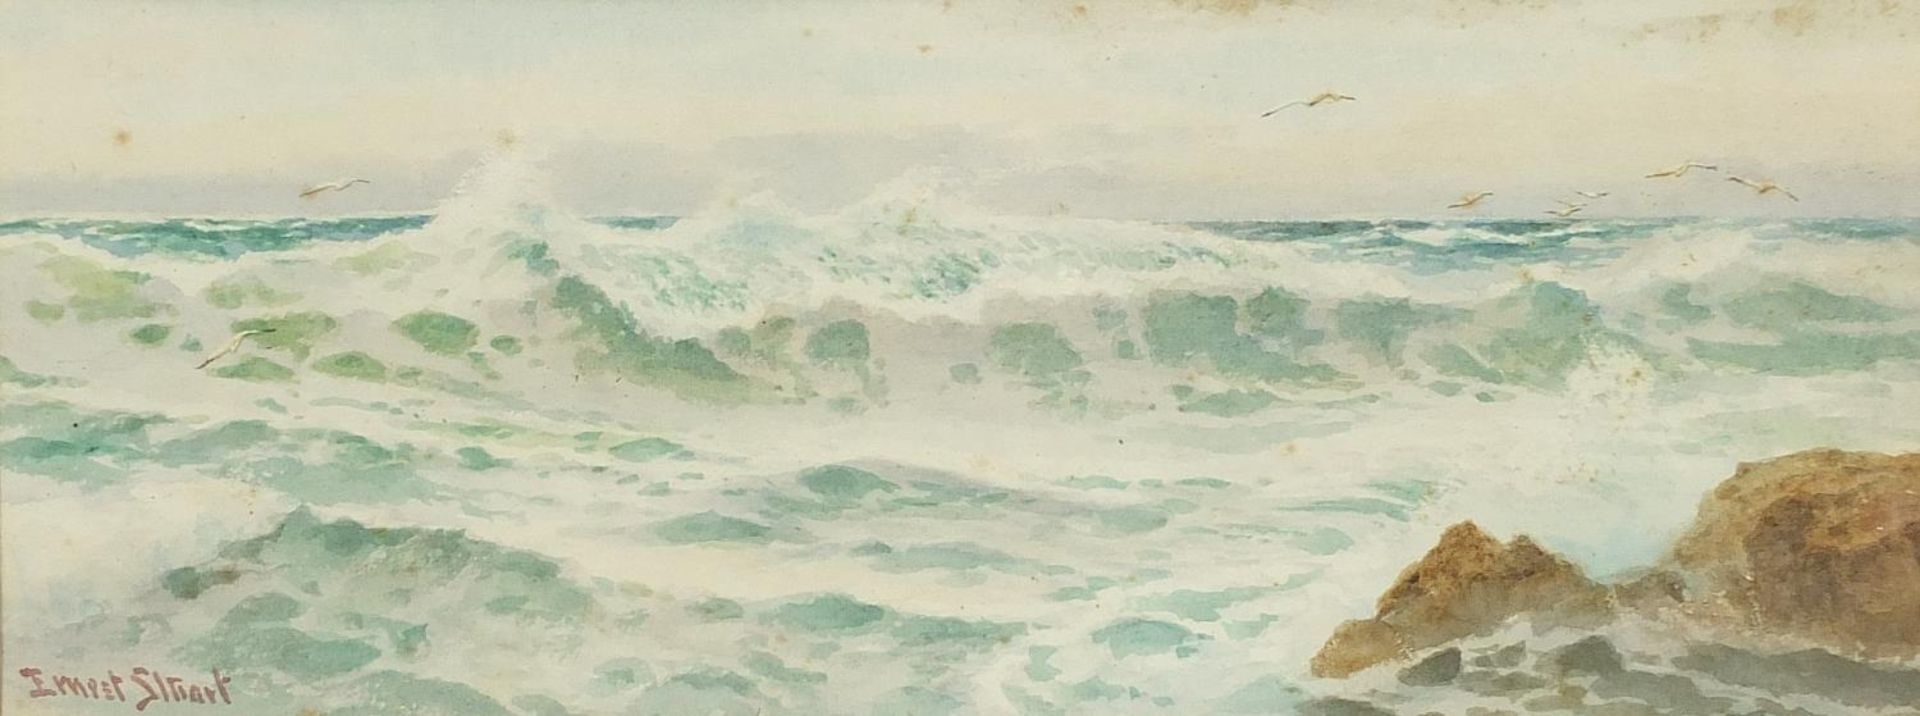 Ernest Stuart - Coastal scene with seagulls, watercolour, mounted, framed and glazed, 29cm x